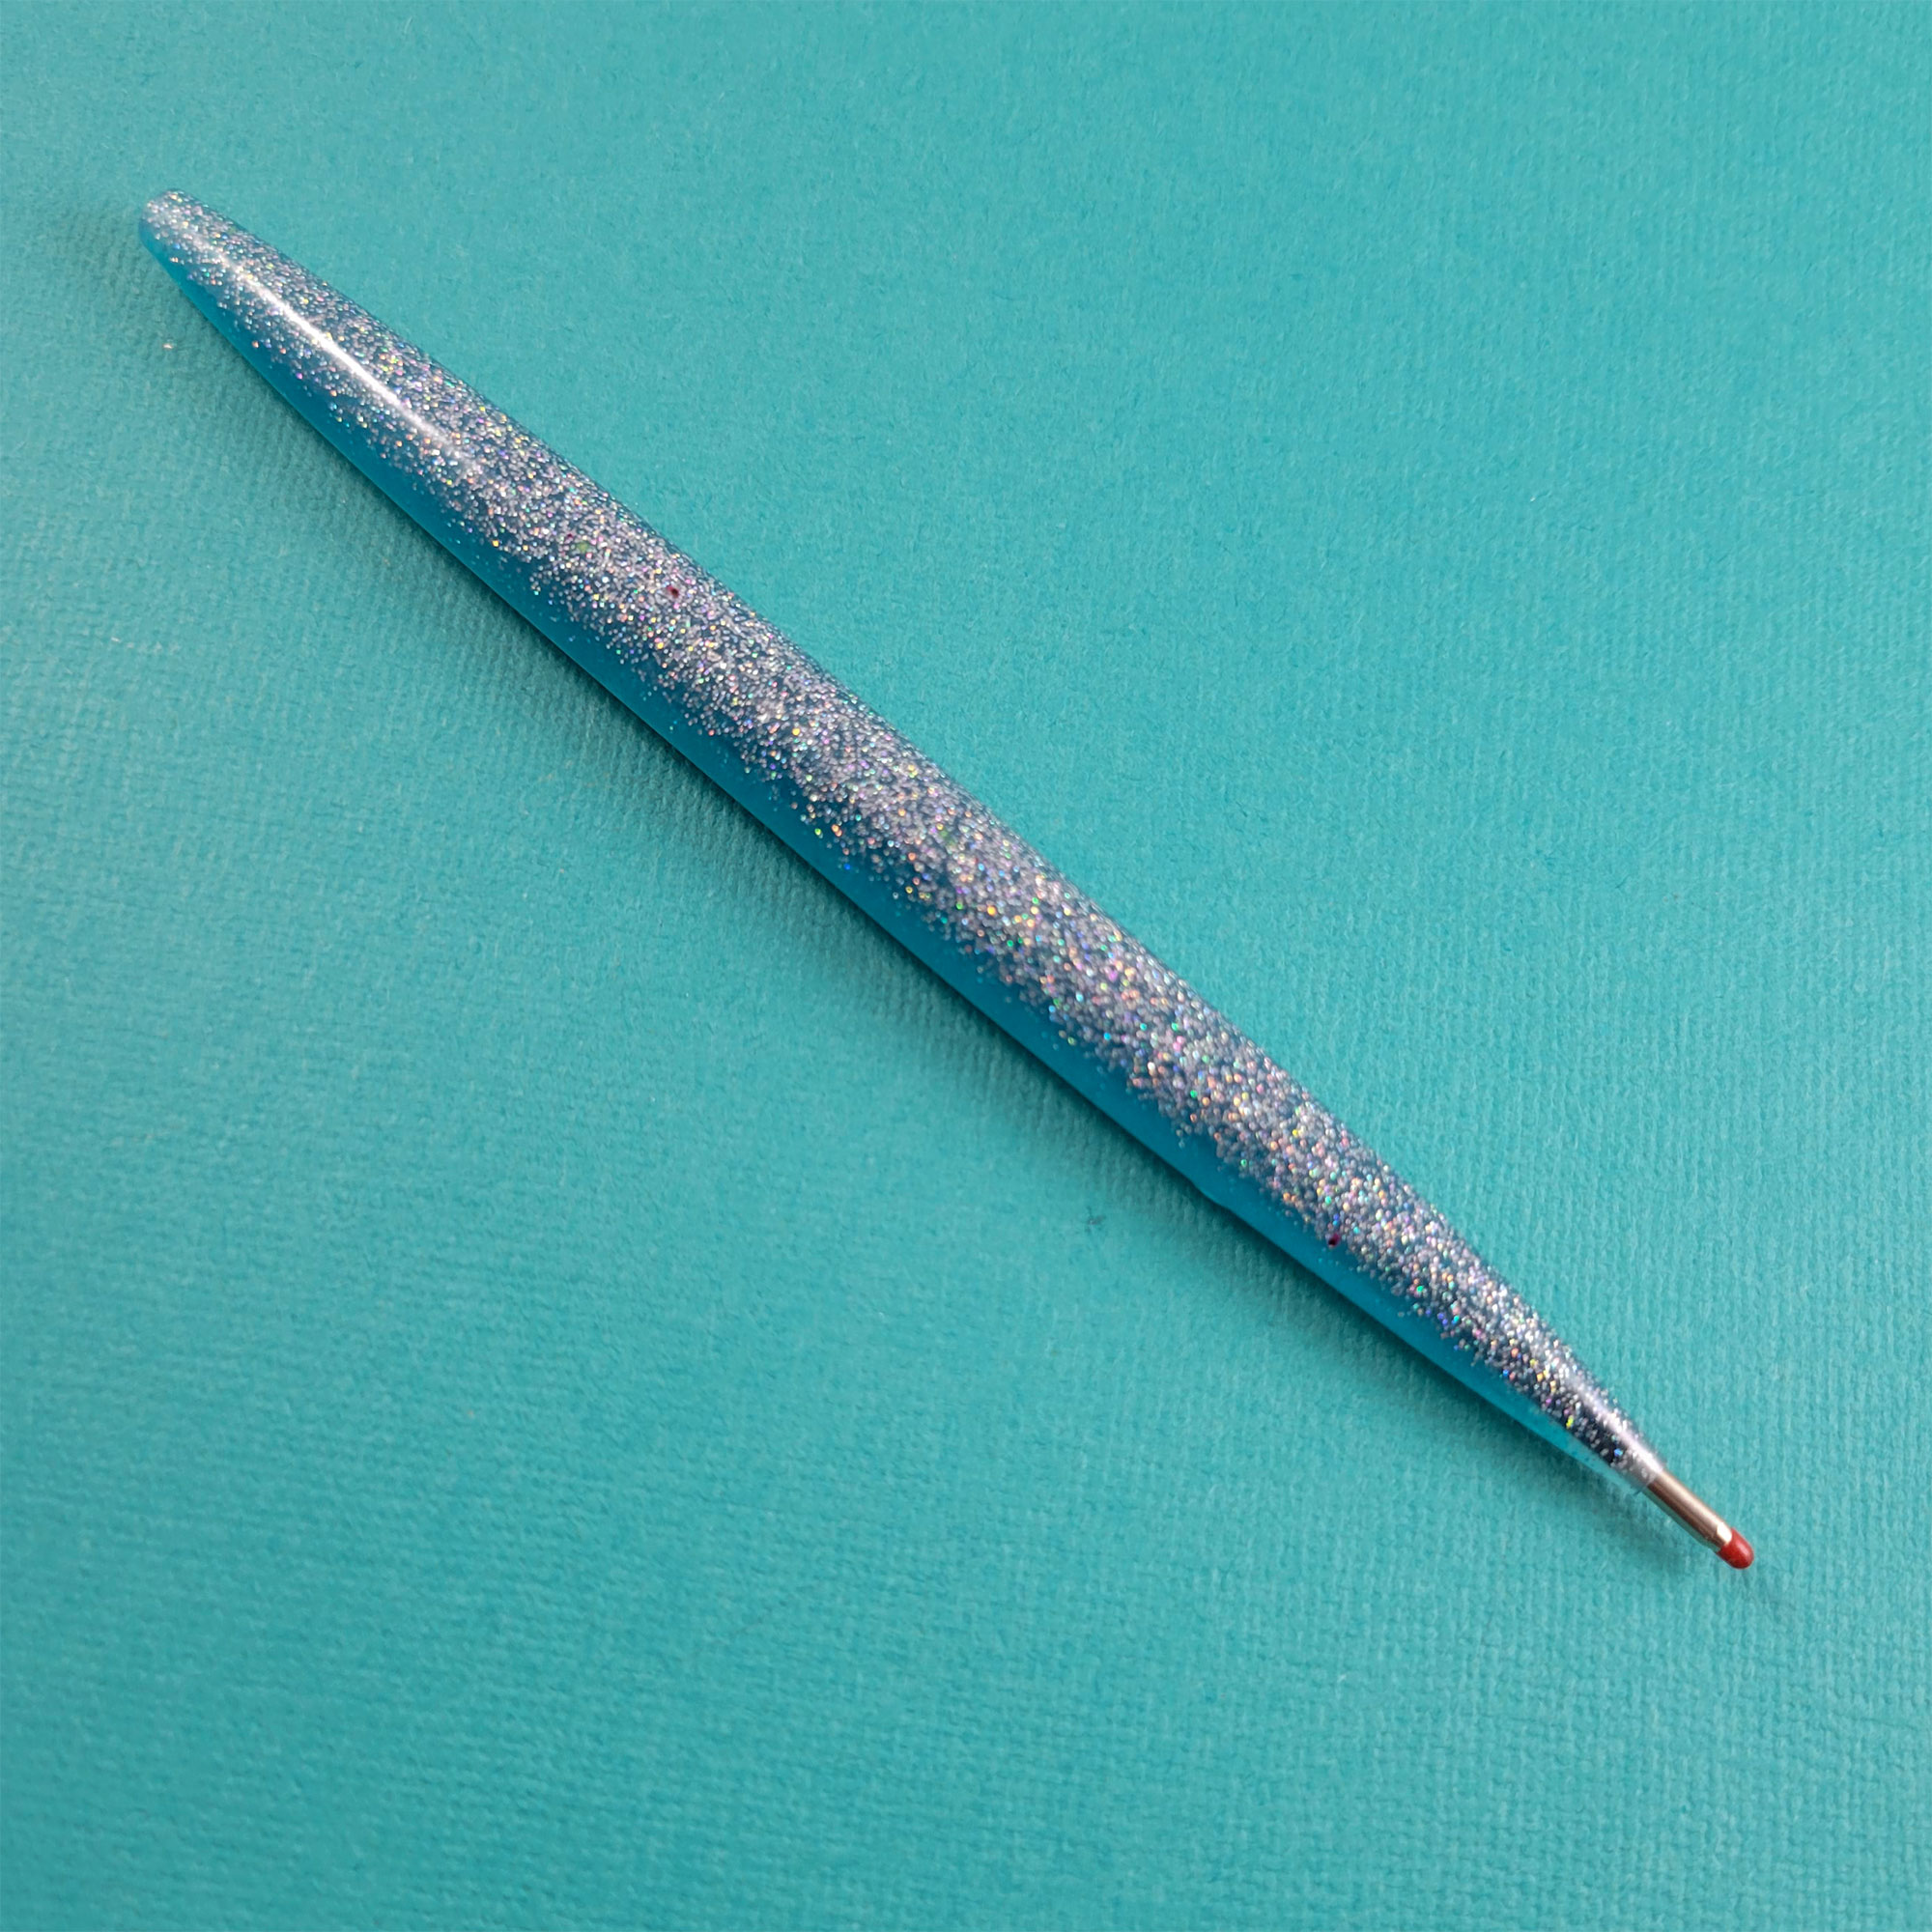 Glittery Blue Handmade Ball Point Pen by Wilde Designs